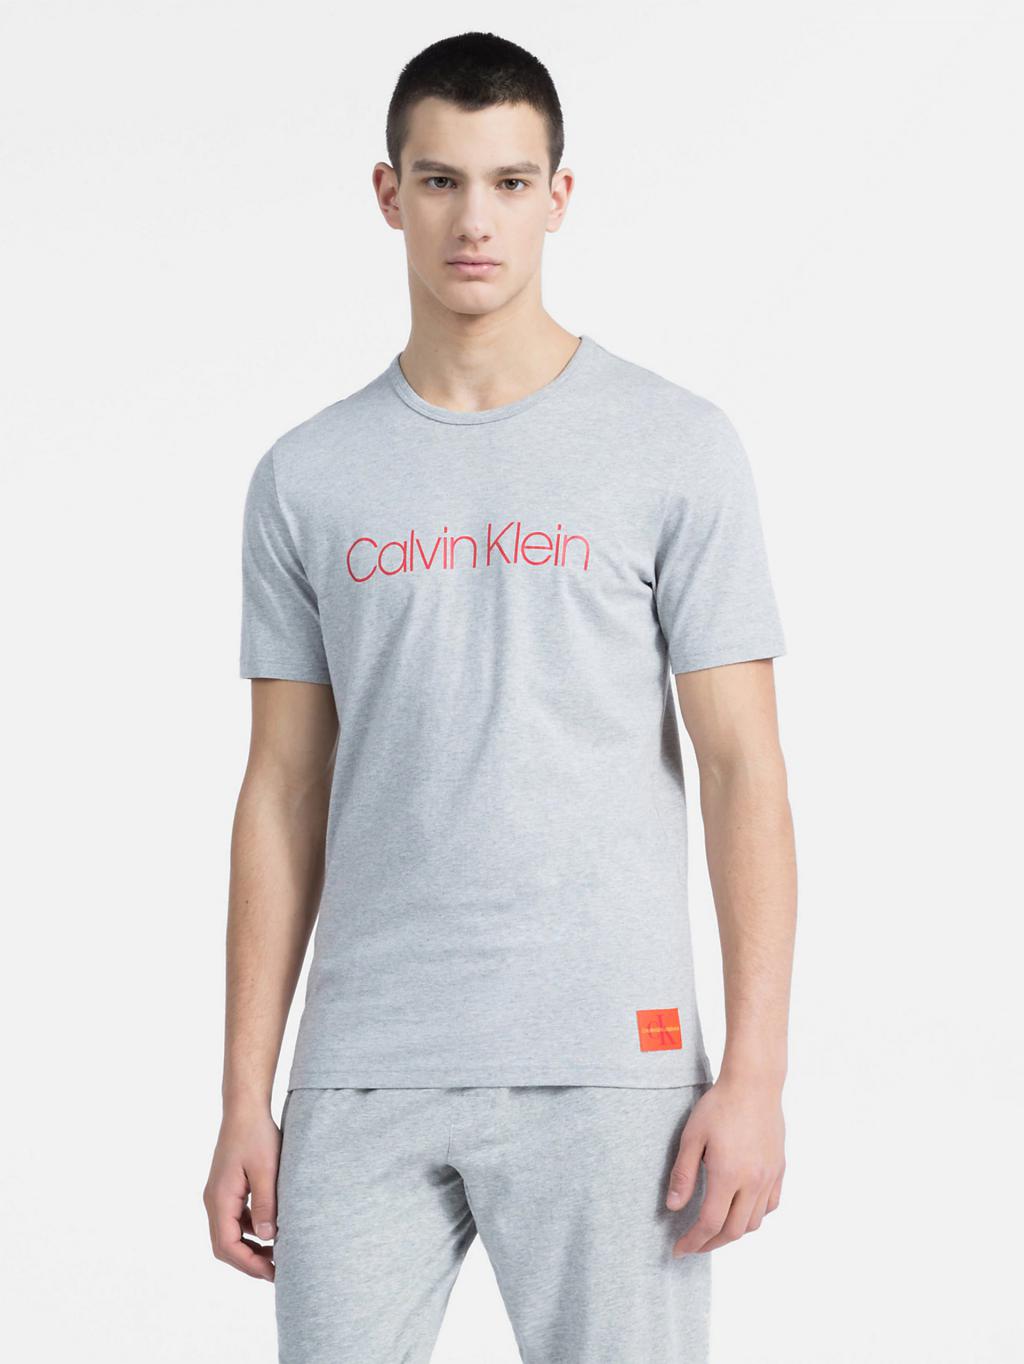 NM1576 - pánské triko Calvin Klein